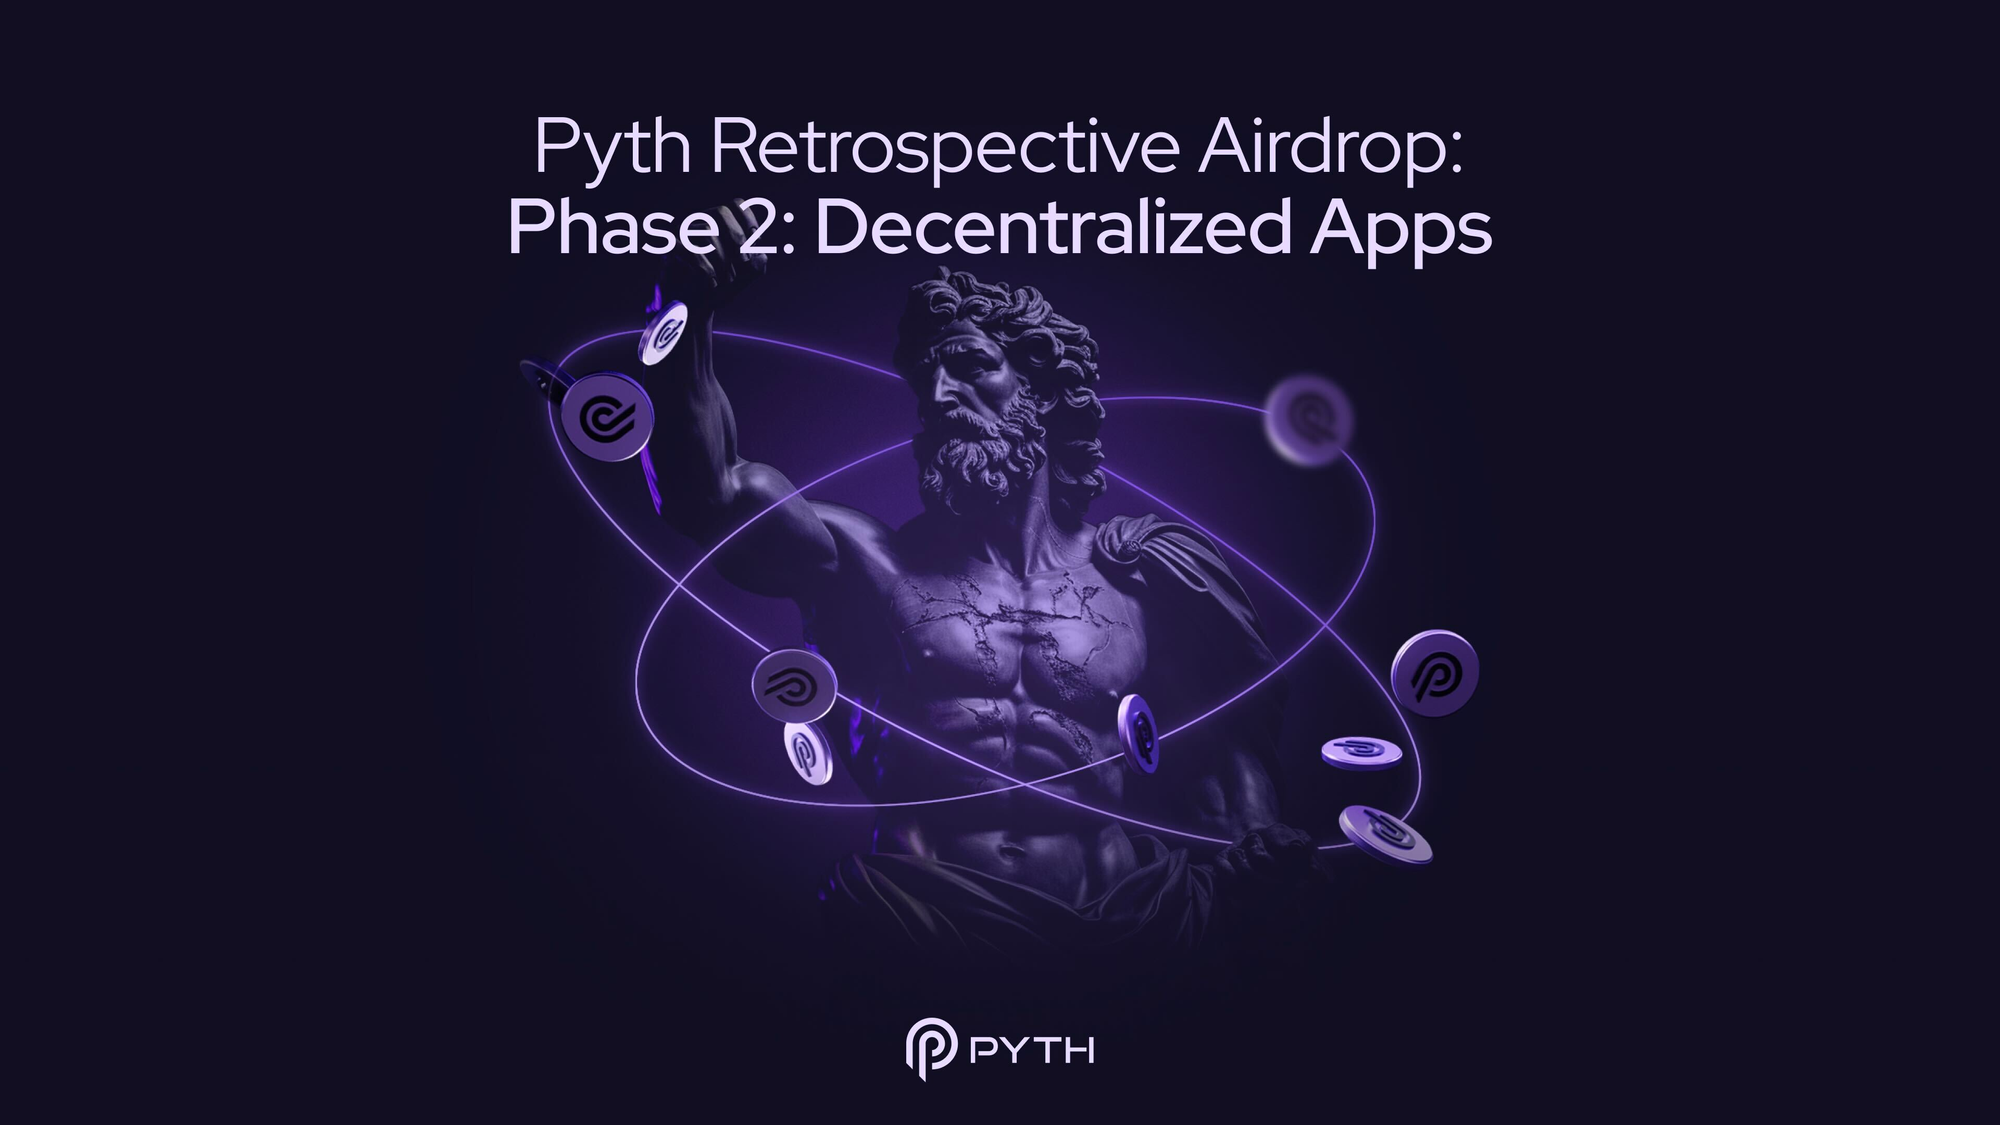 Pyth Retrospective Airdrop: Phase 2 - Decentralized Apps